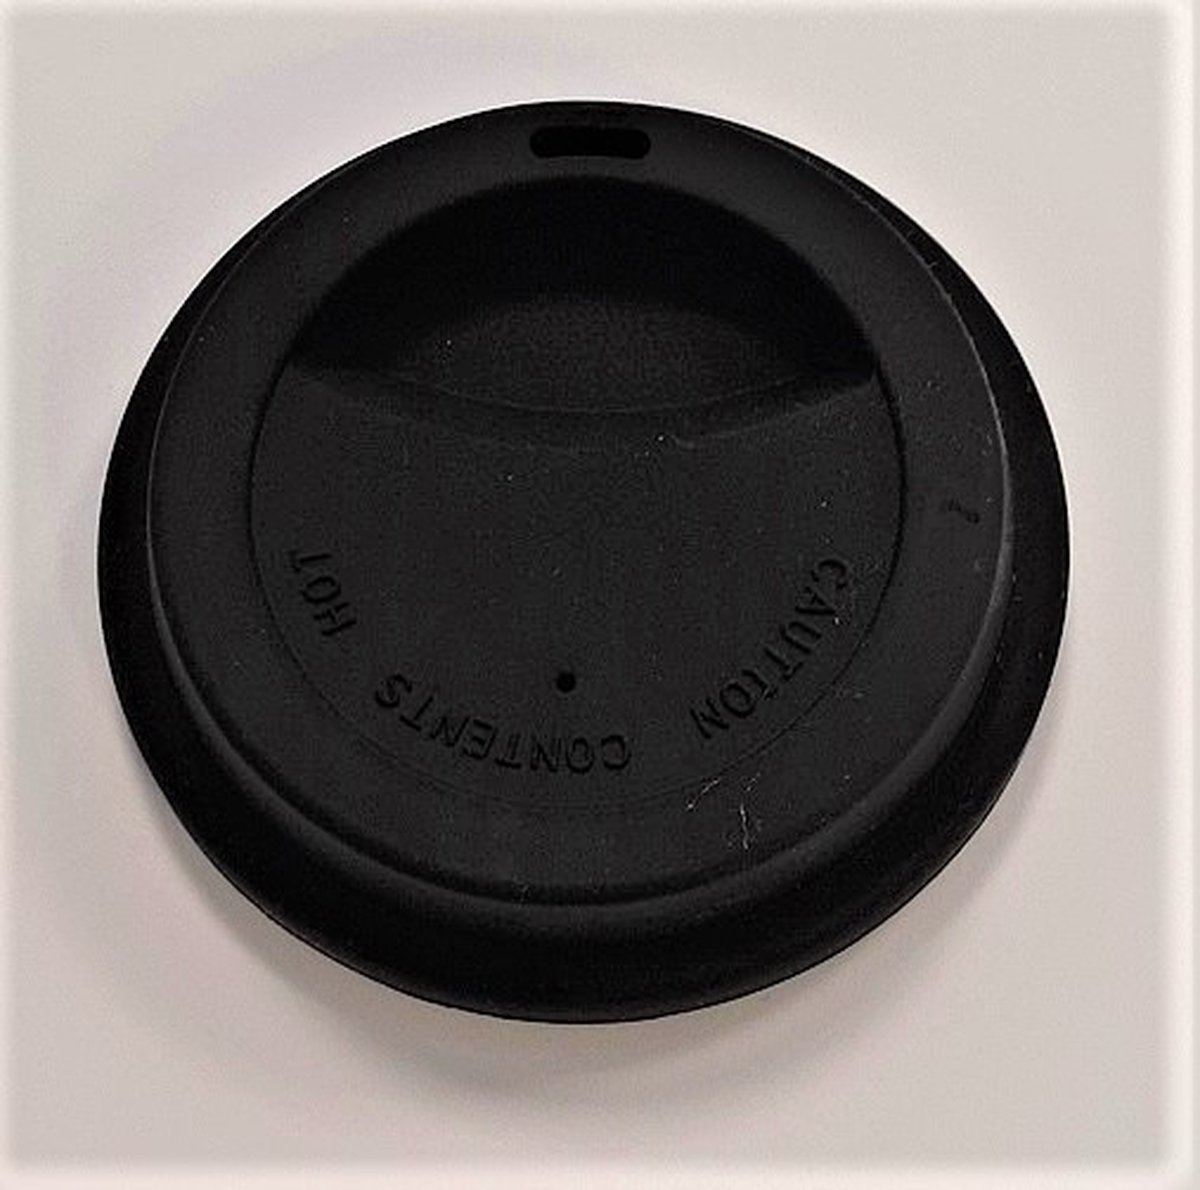 EIZOOK Koffie Thee beker deksel - Zwart - Siliconen - Multifunctioneel - herbruikbaar